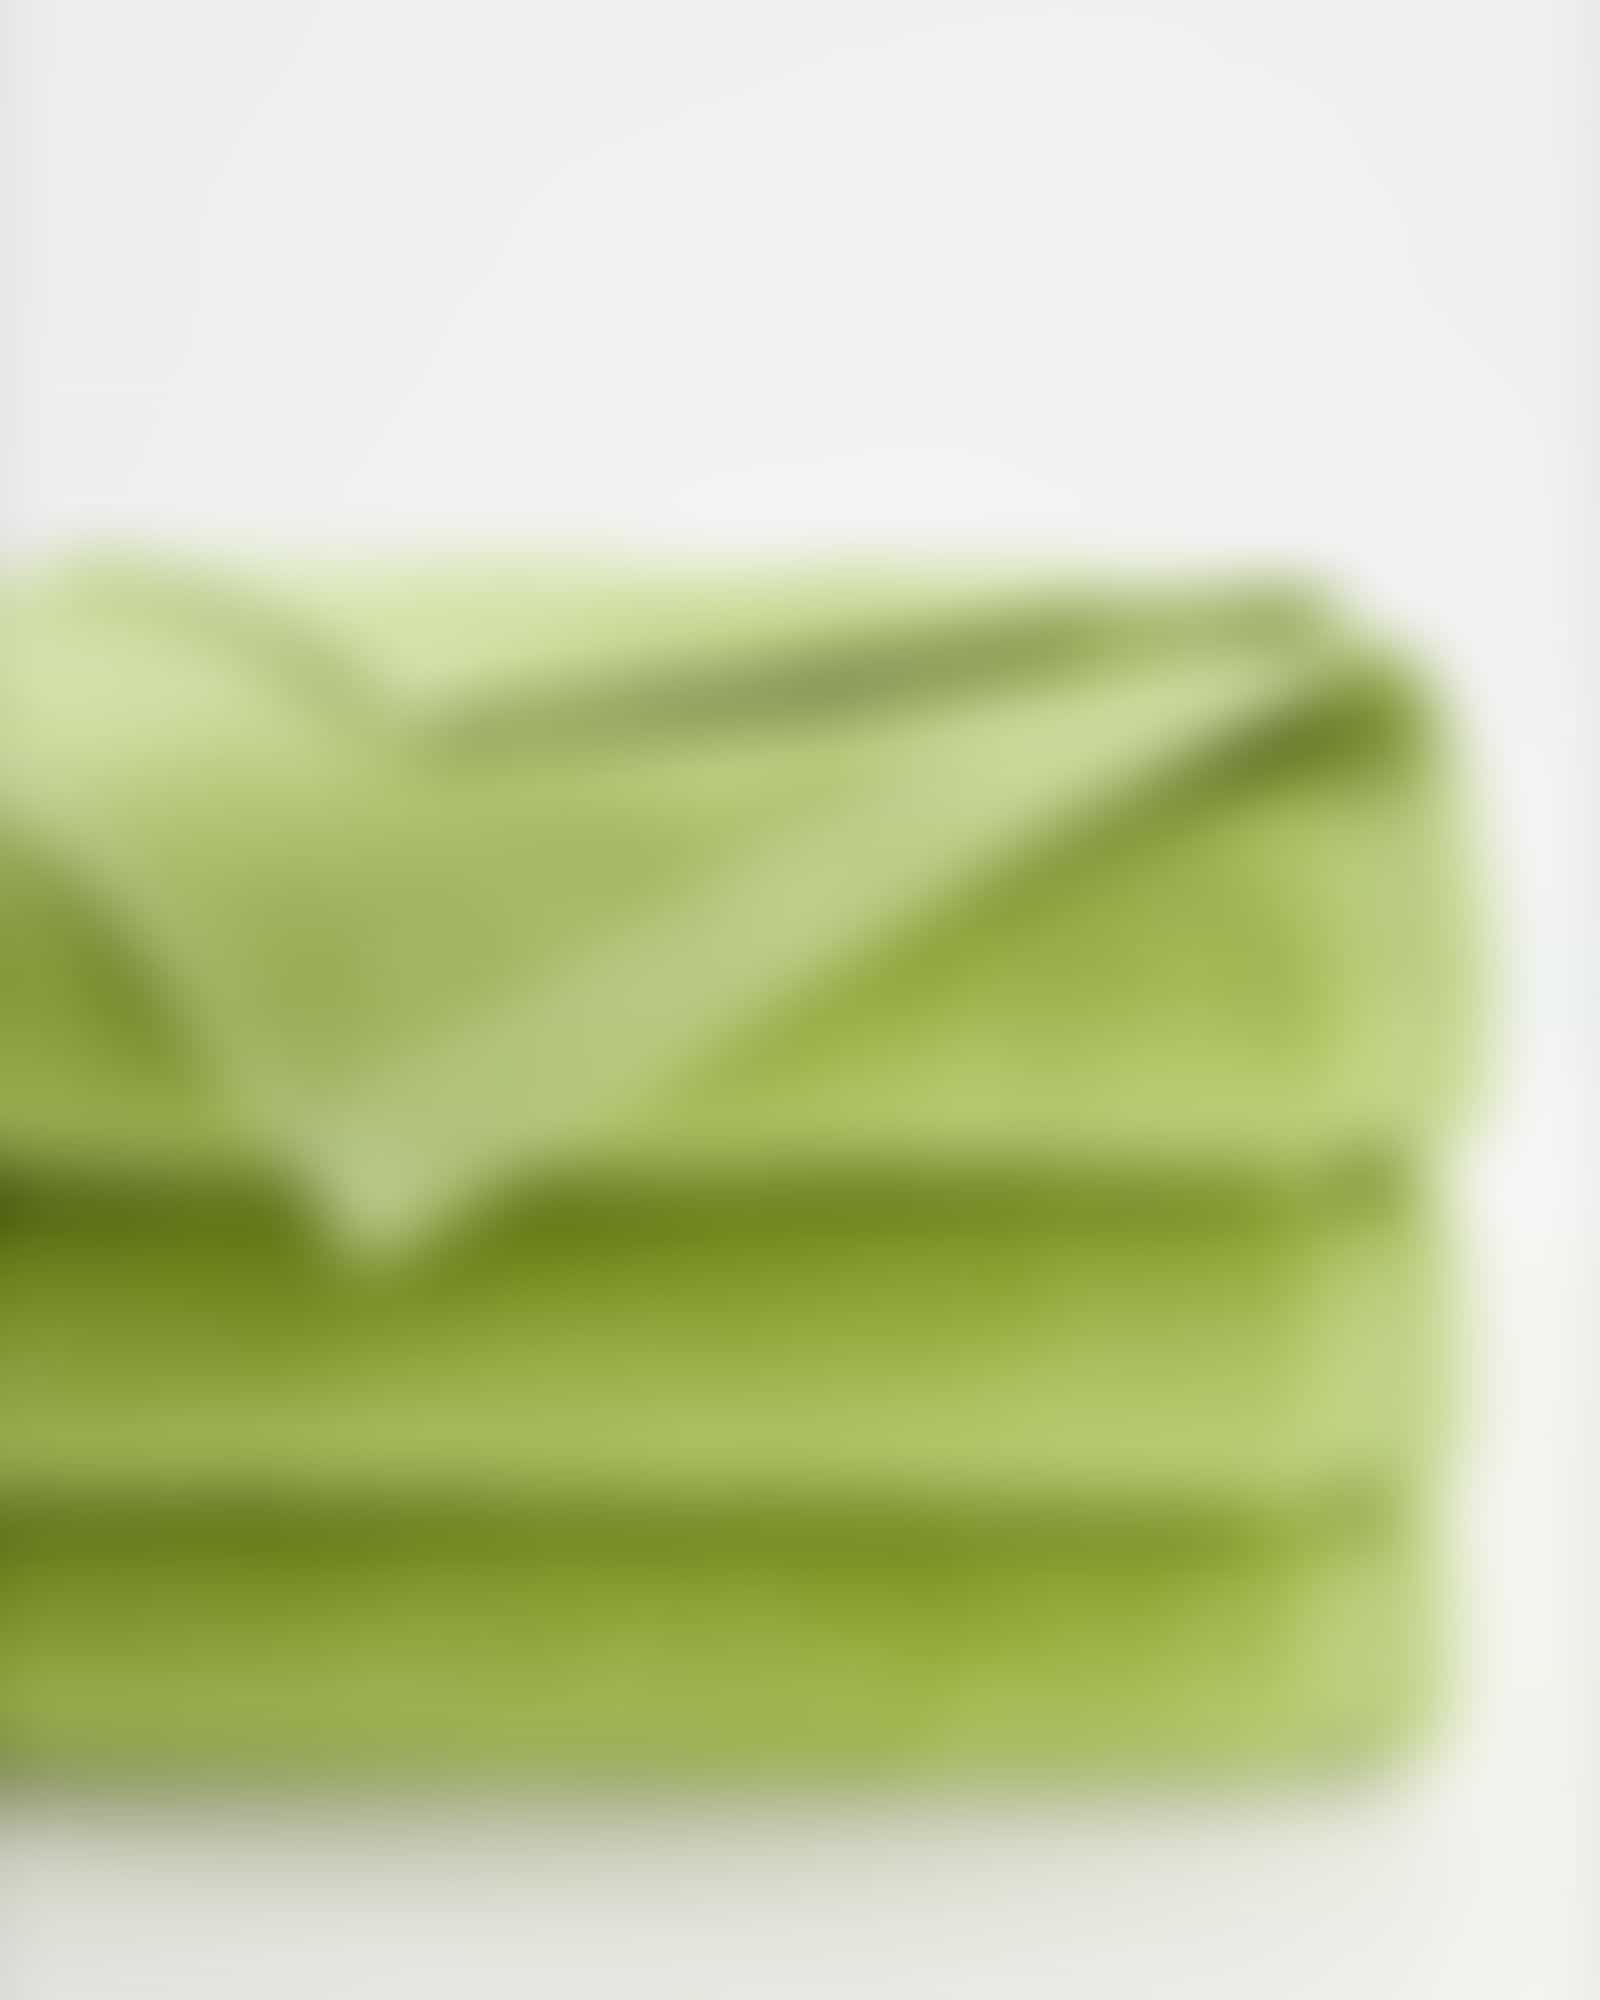 Vossen Handtücher Vegan Life - Farbe: avocado - 5705 - Gästetuch 40x60 cm